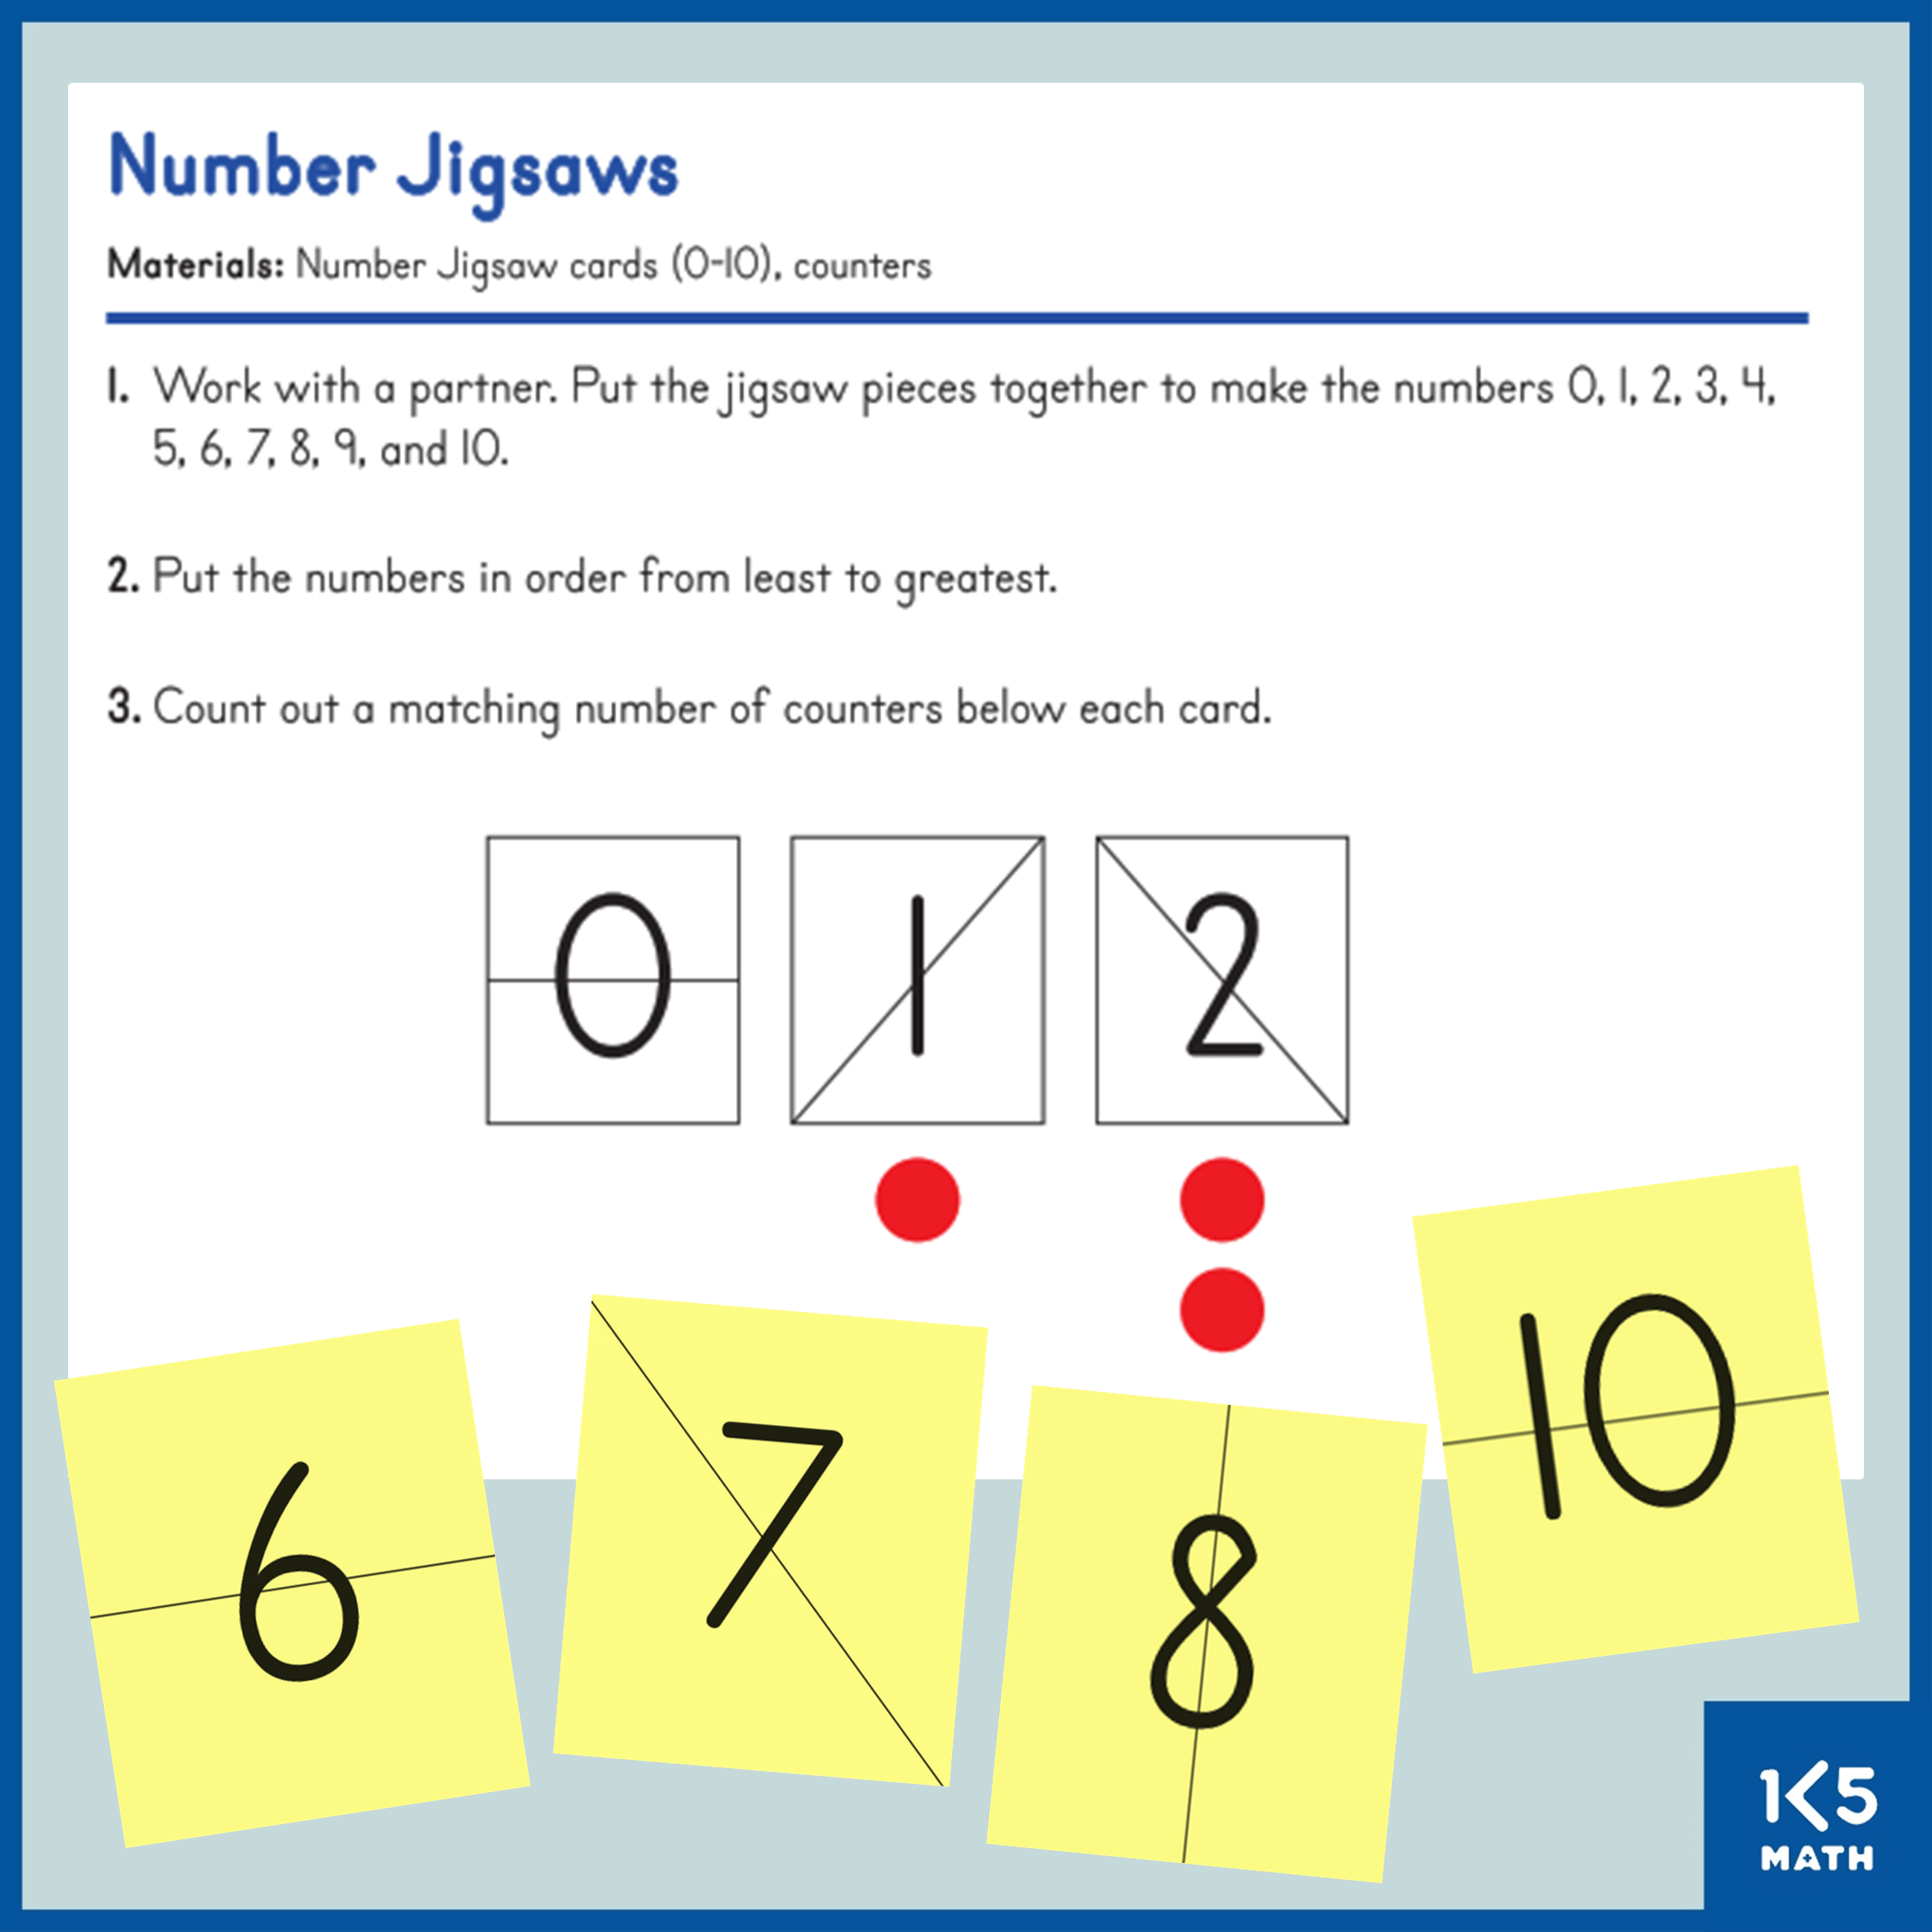 Number Jigsaws